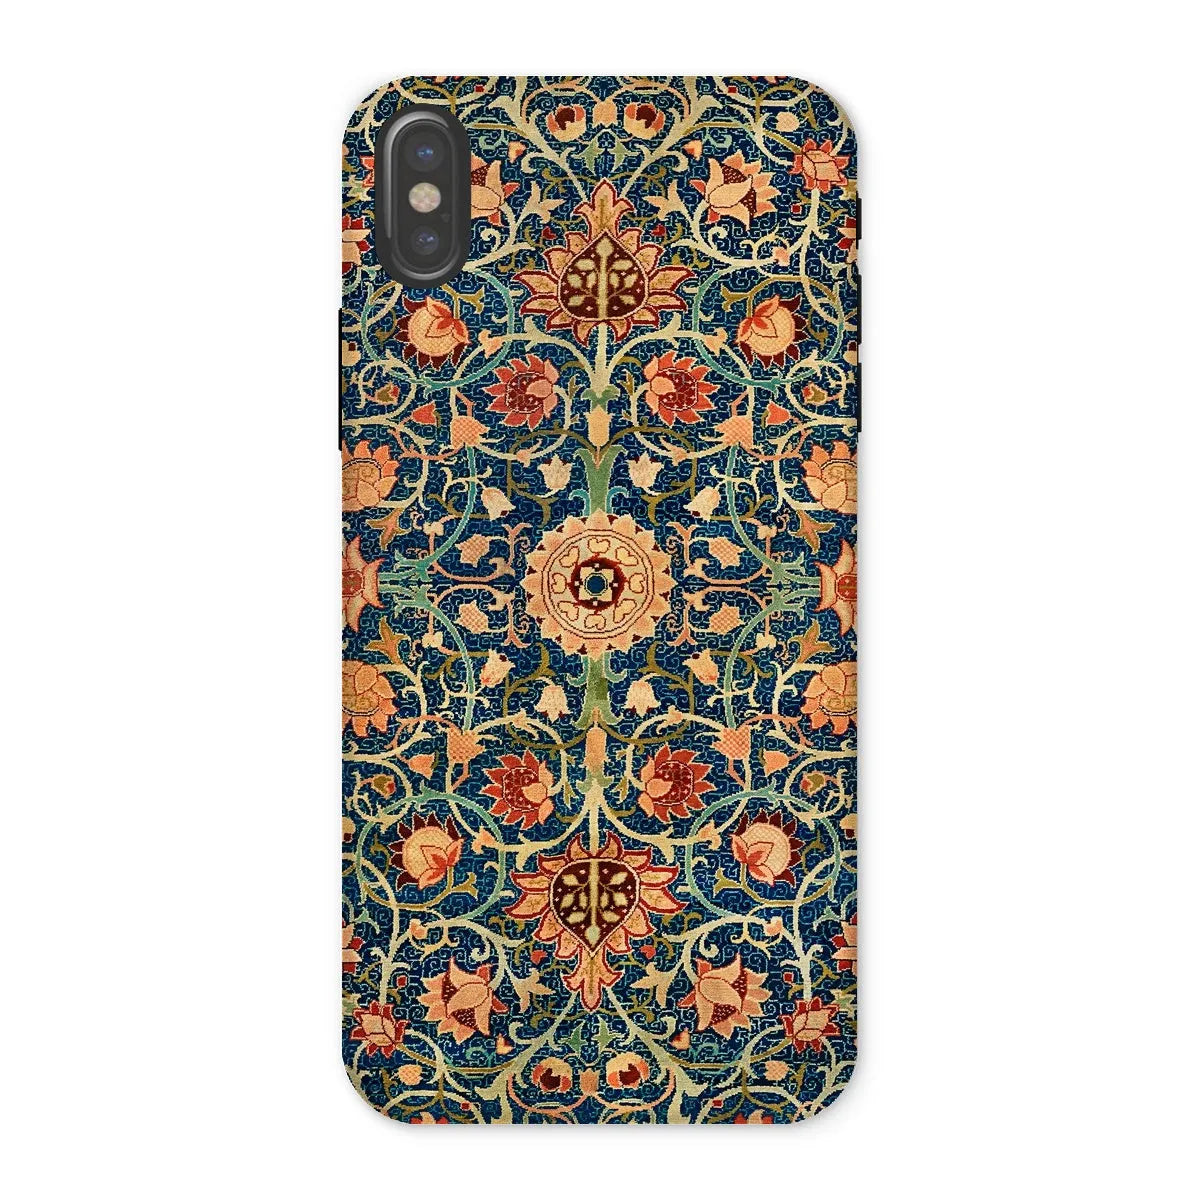 Holland Park Carpet - William Morris Pattern Art Phone Case - Iphone x / Matte - Mobile Phone Cases - Aesthetic Art